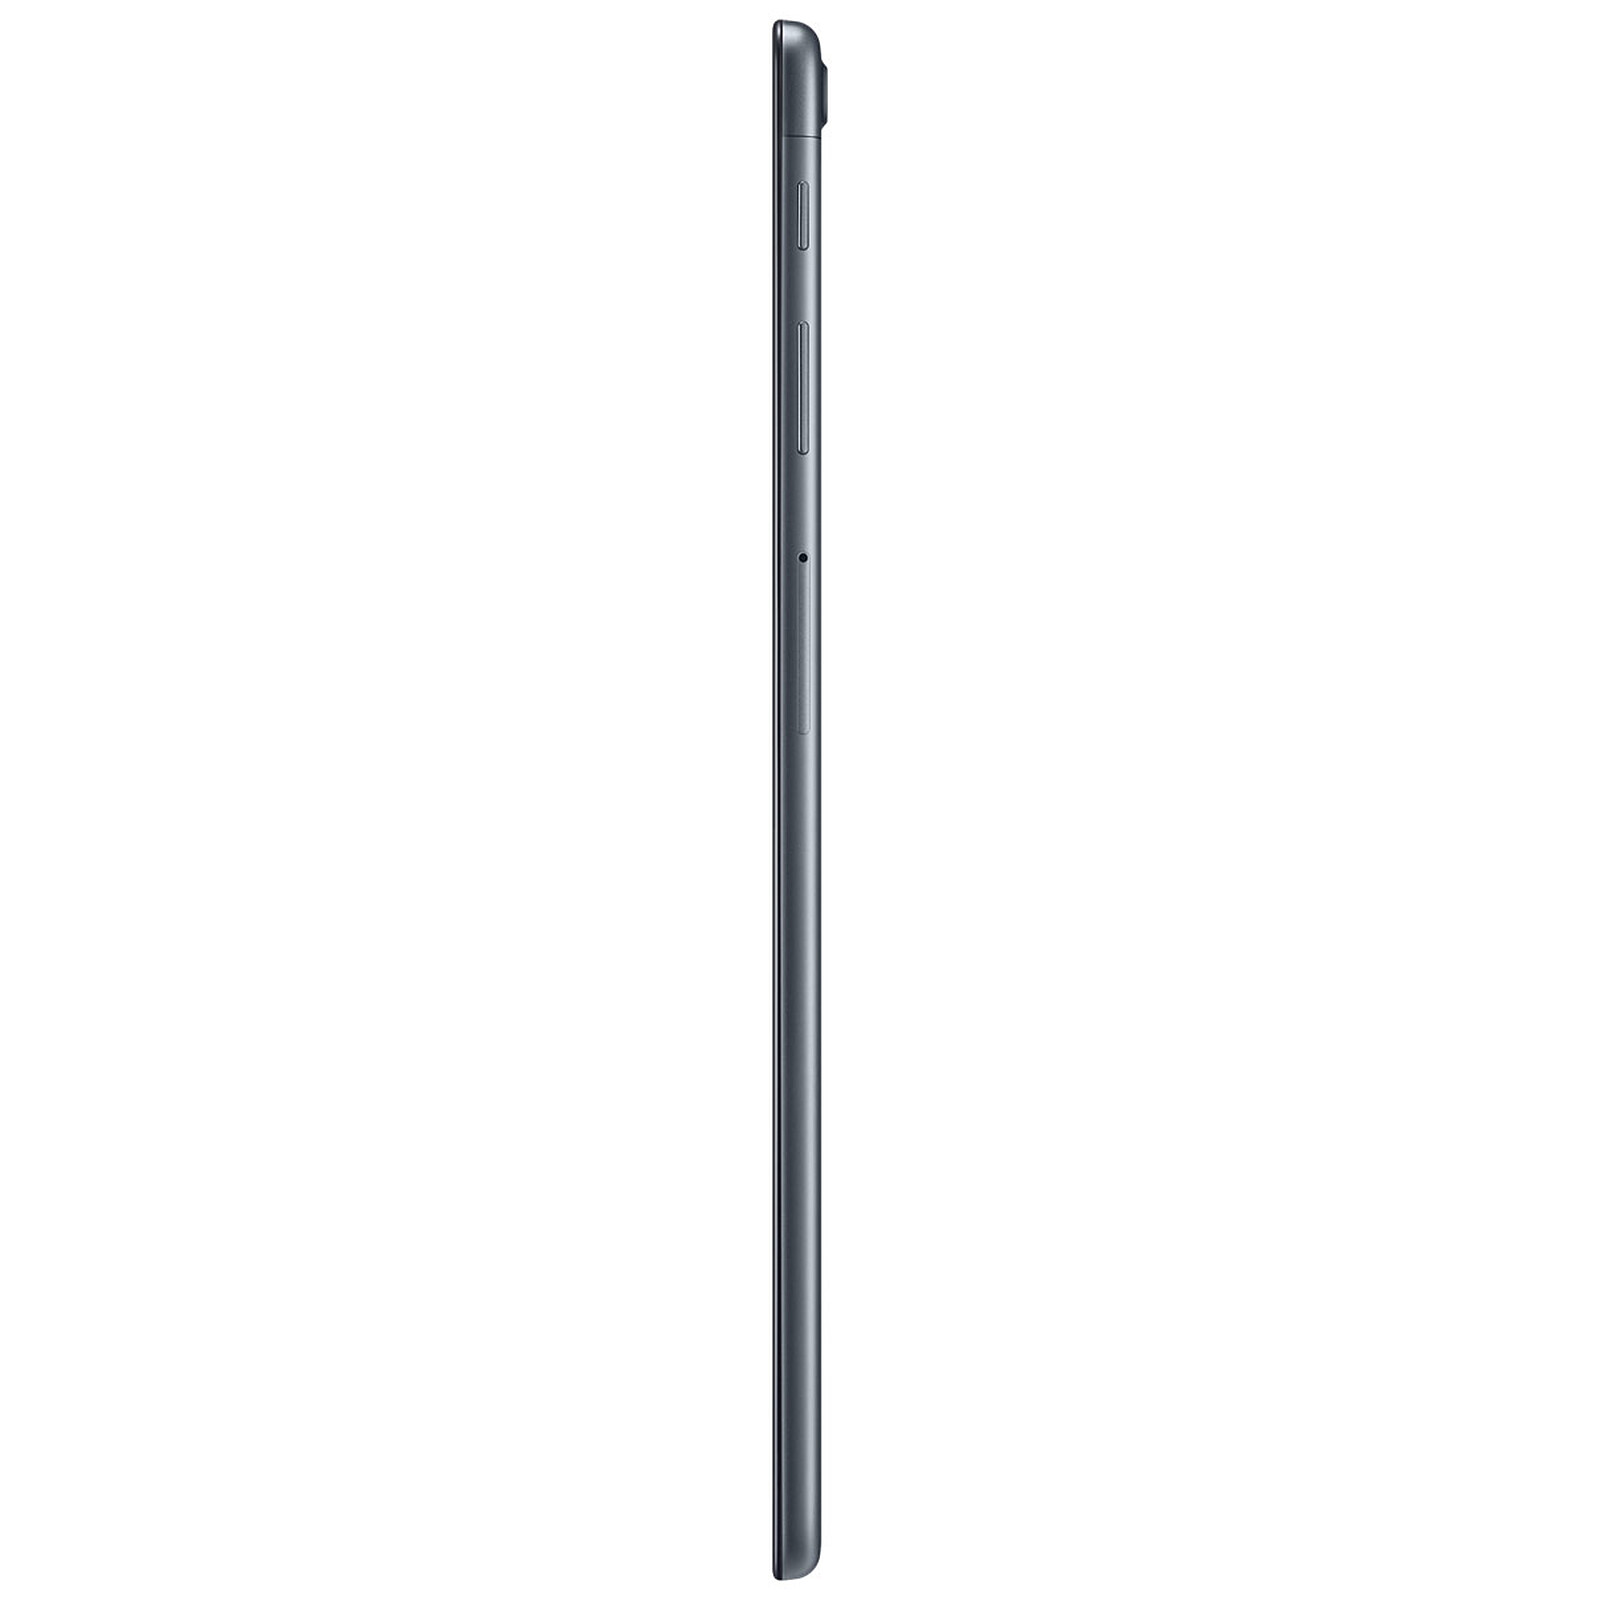 Samsung Galaxy Tab A (2019) 4G Noire 32Go Reconditionnée